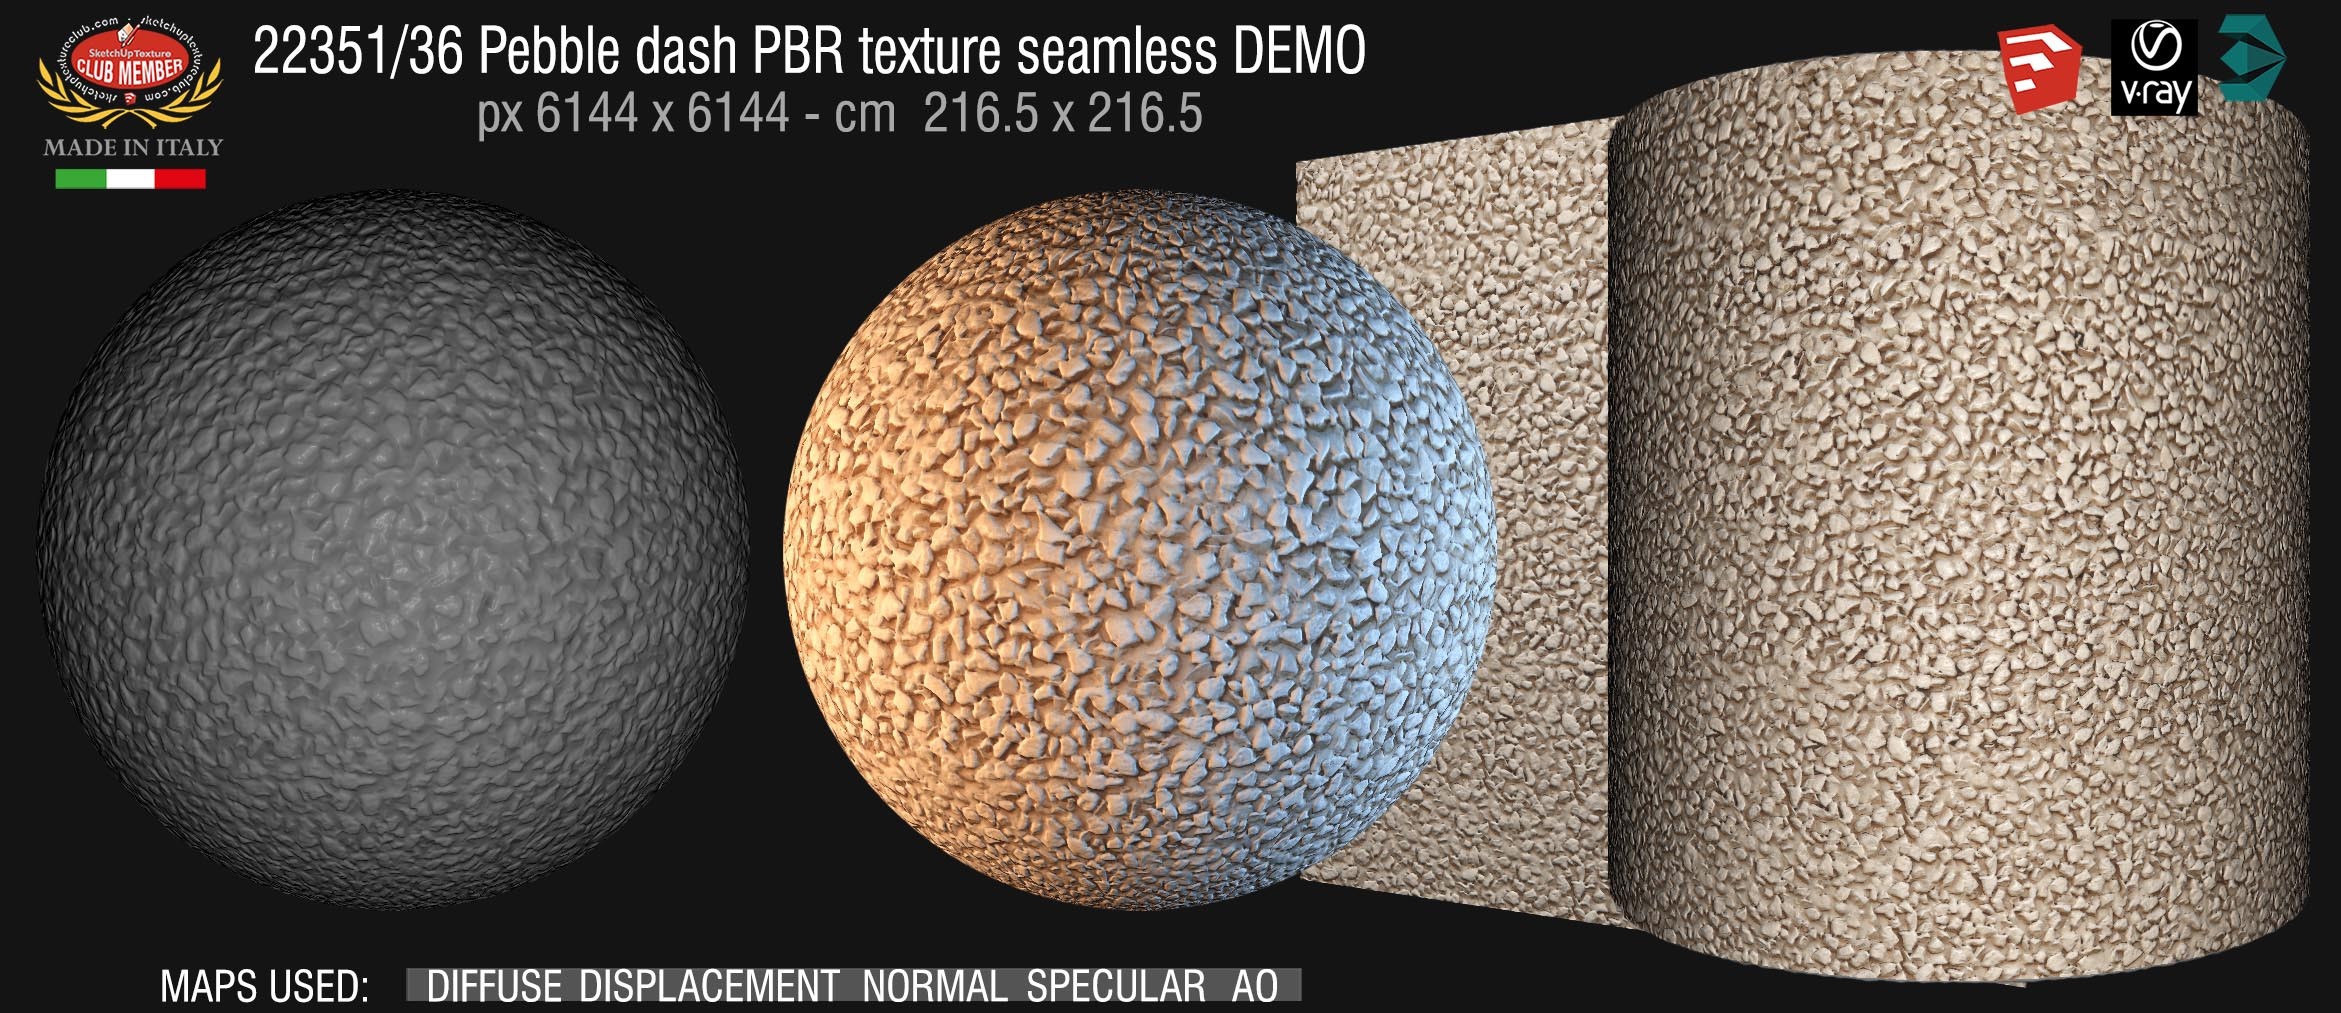 22351/36 Pebble dash PBR texture seamless DEMO